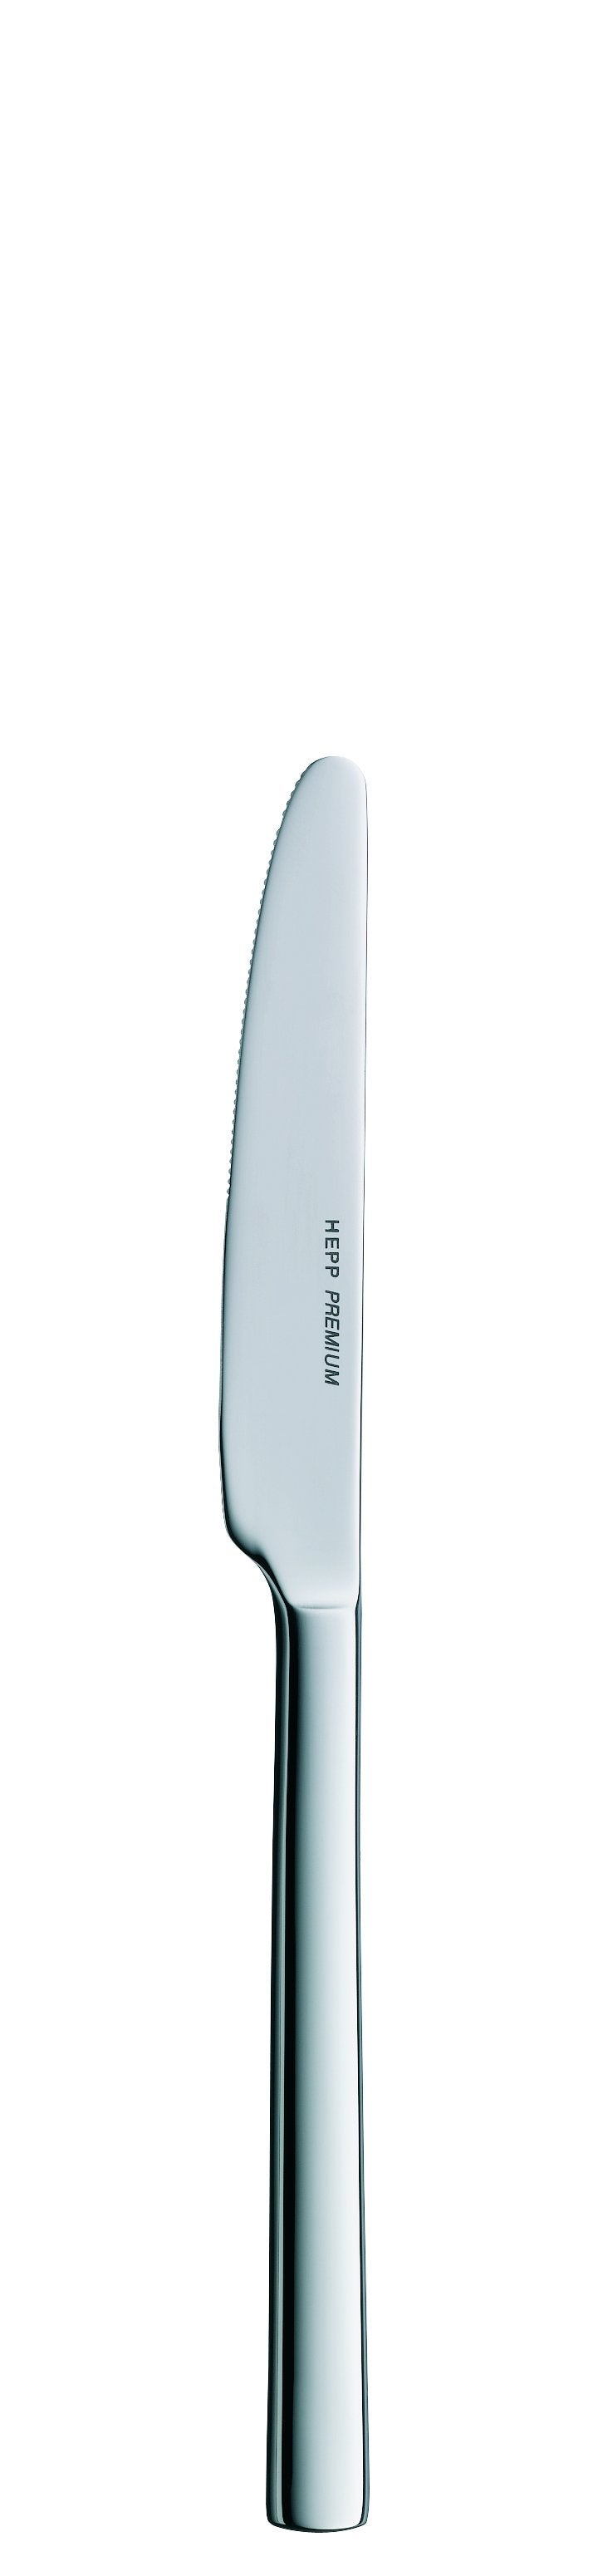 Fruit knife MB LENTO 180mm